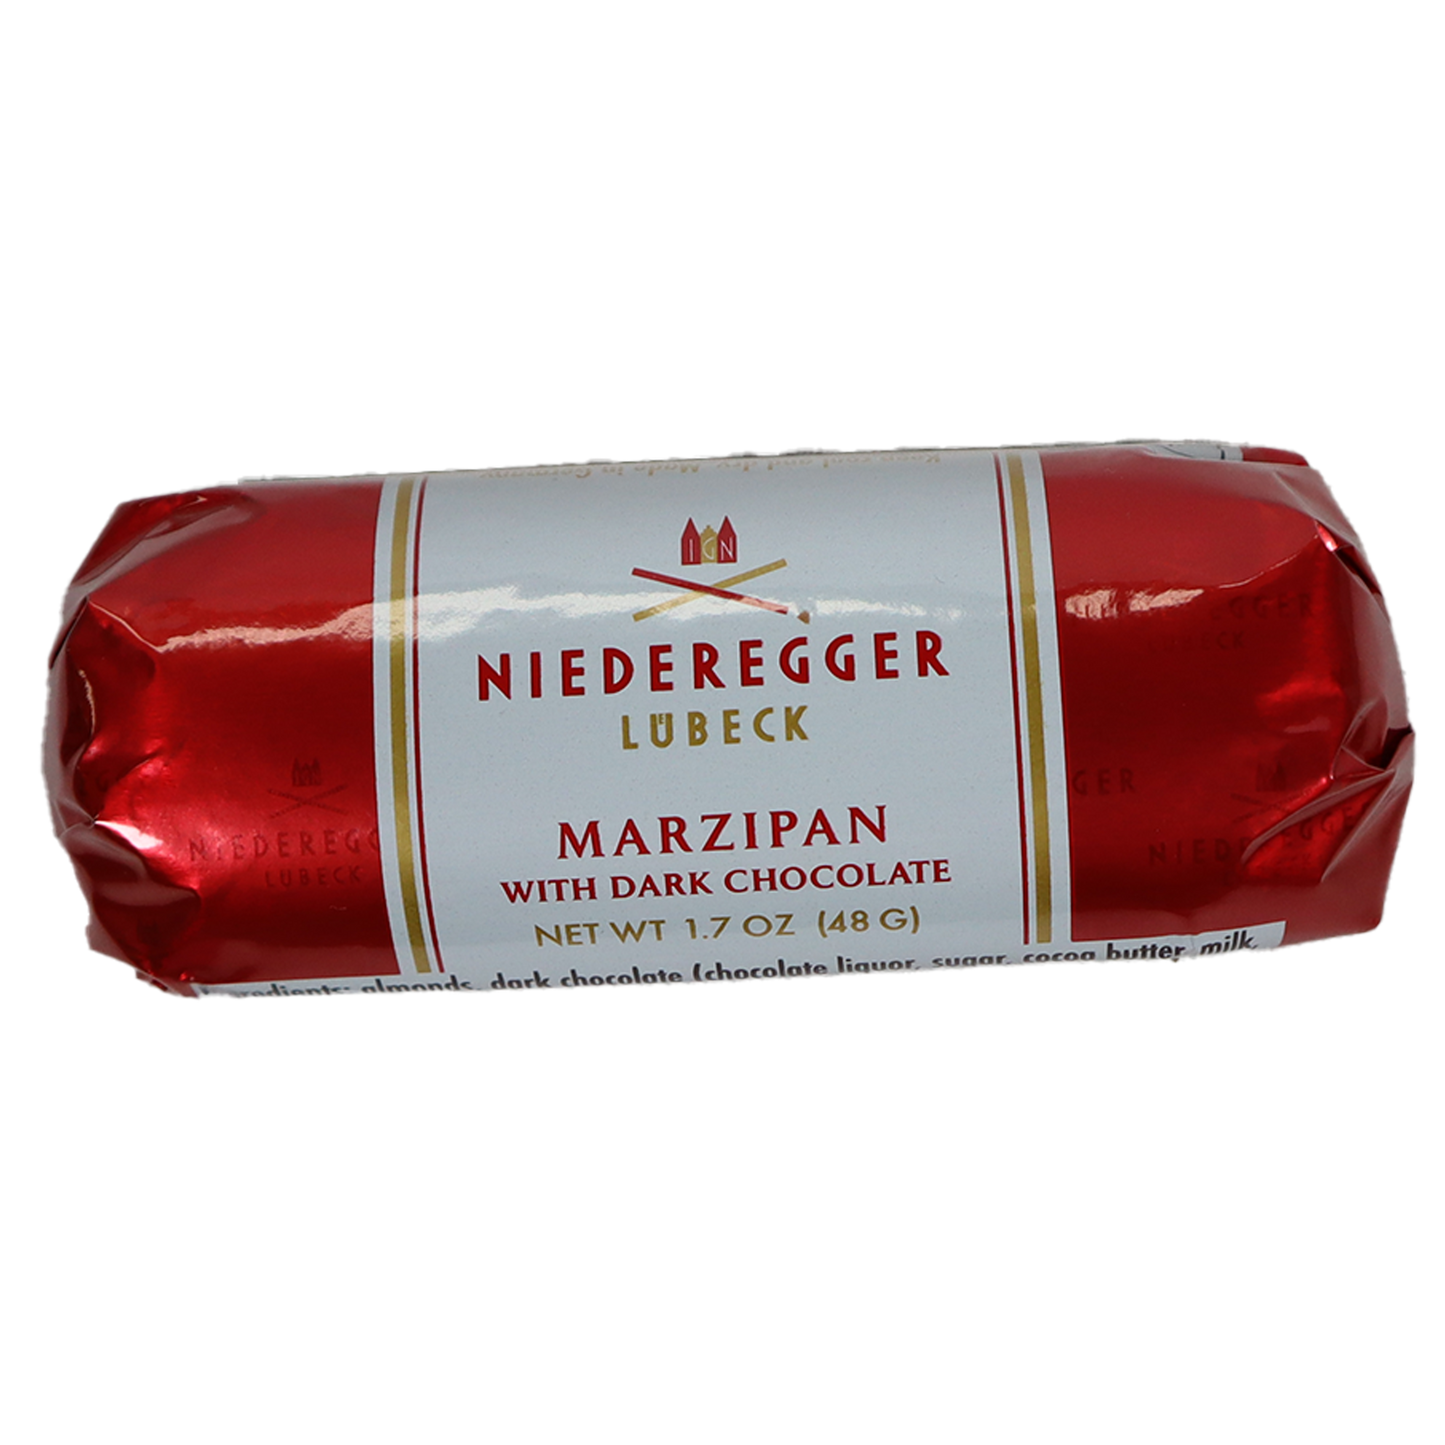 Niederegger Lubeck 1.6 oz